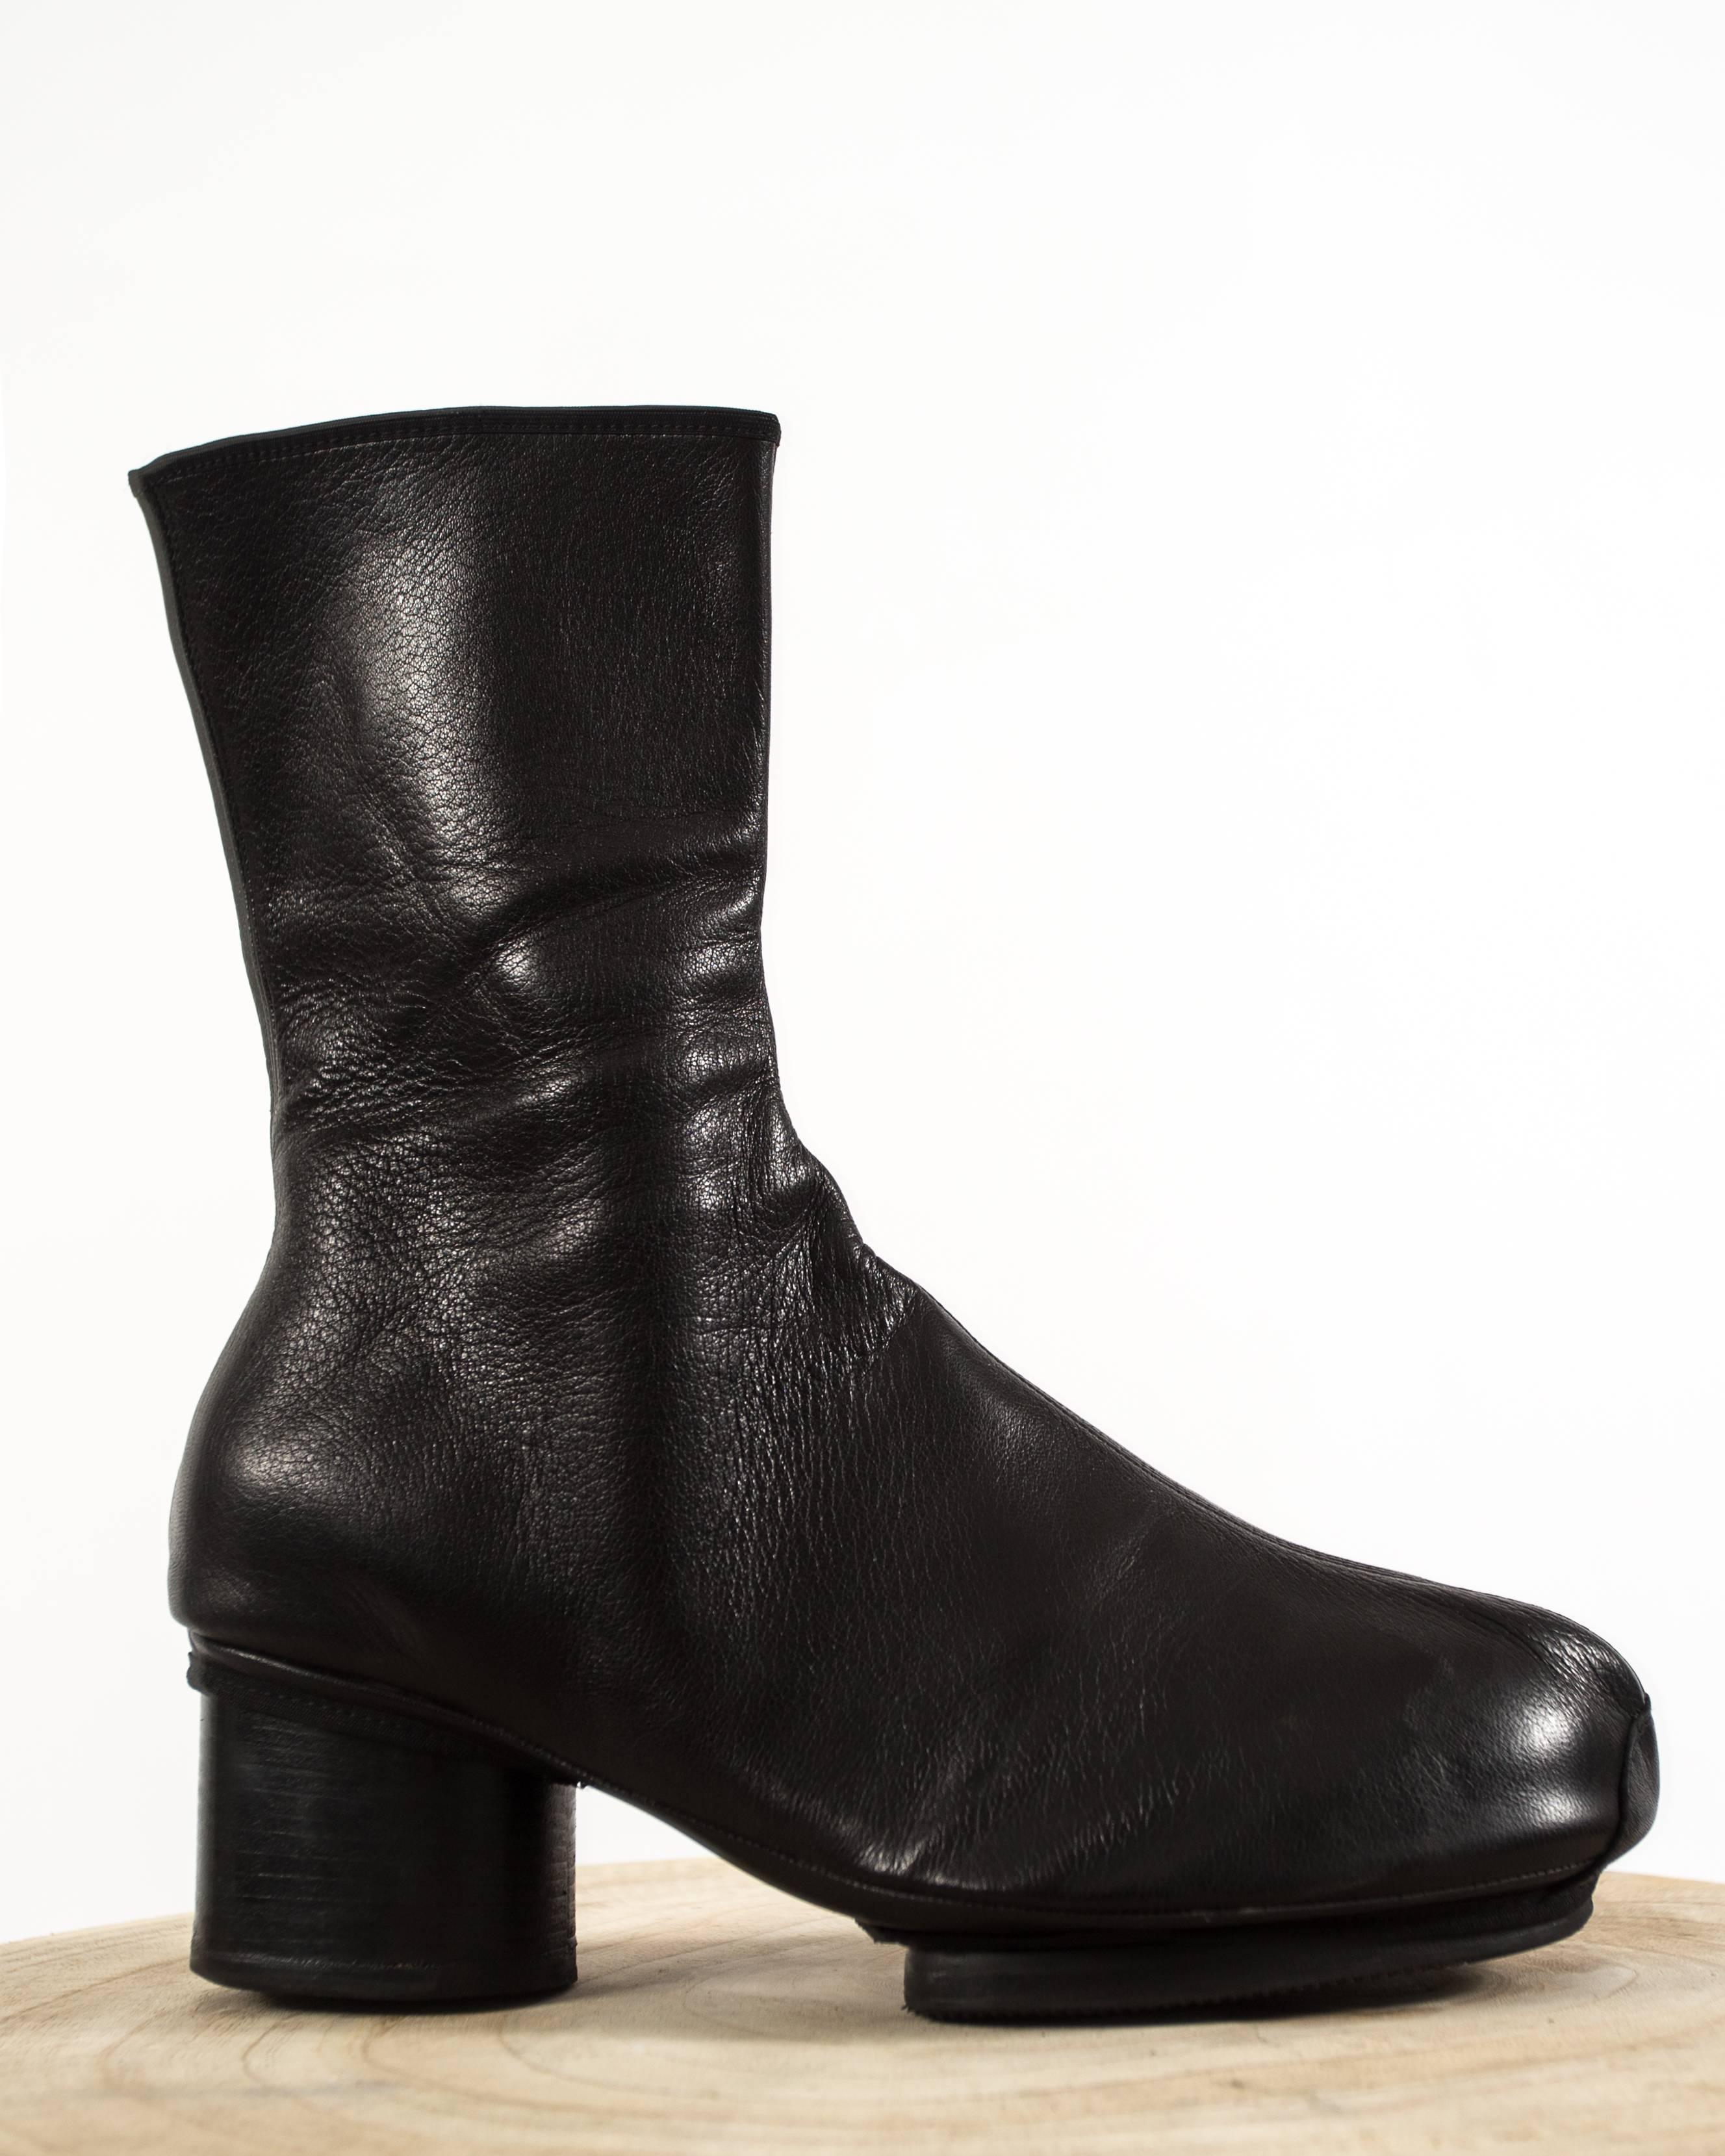 Maison Martin Margiela Autumn-Winter 1999 black leather shoes with ...